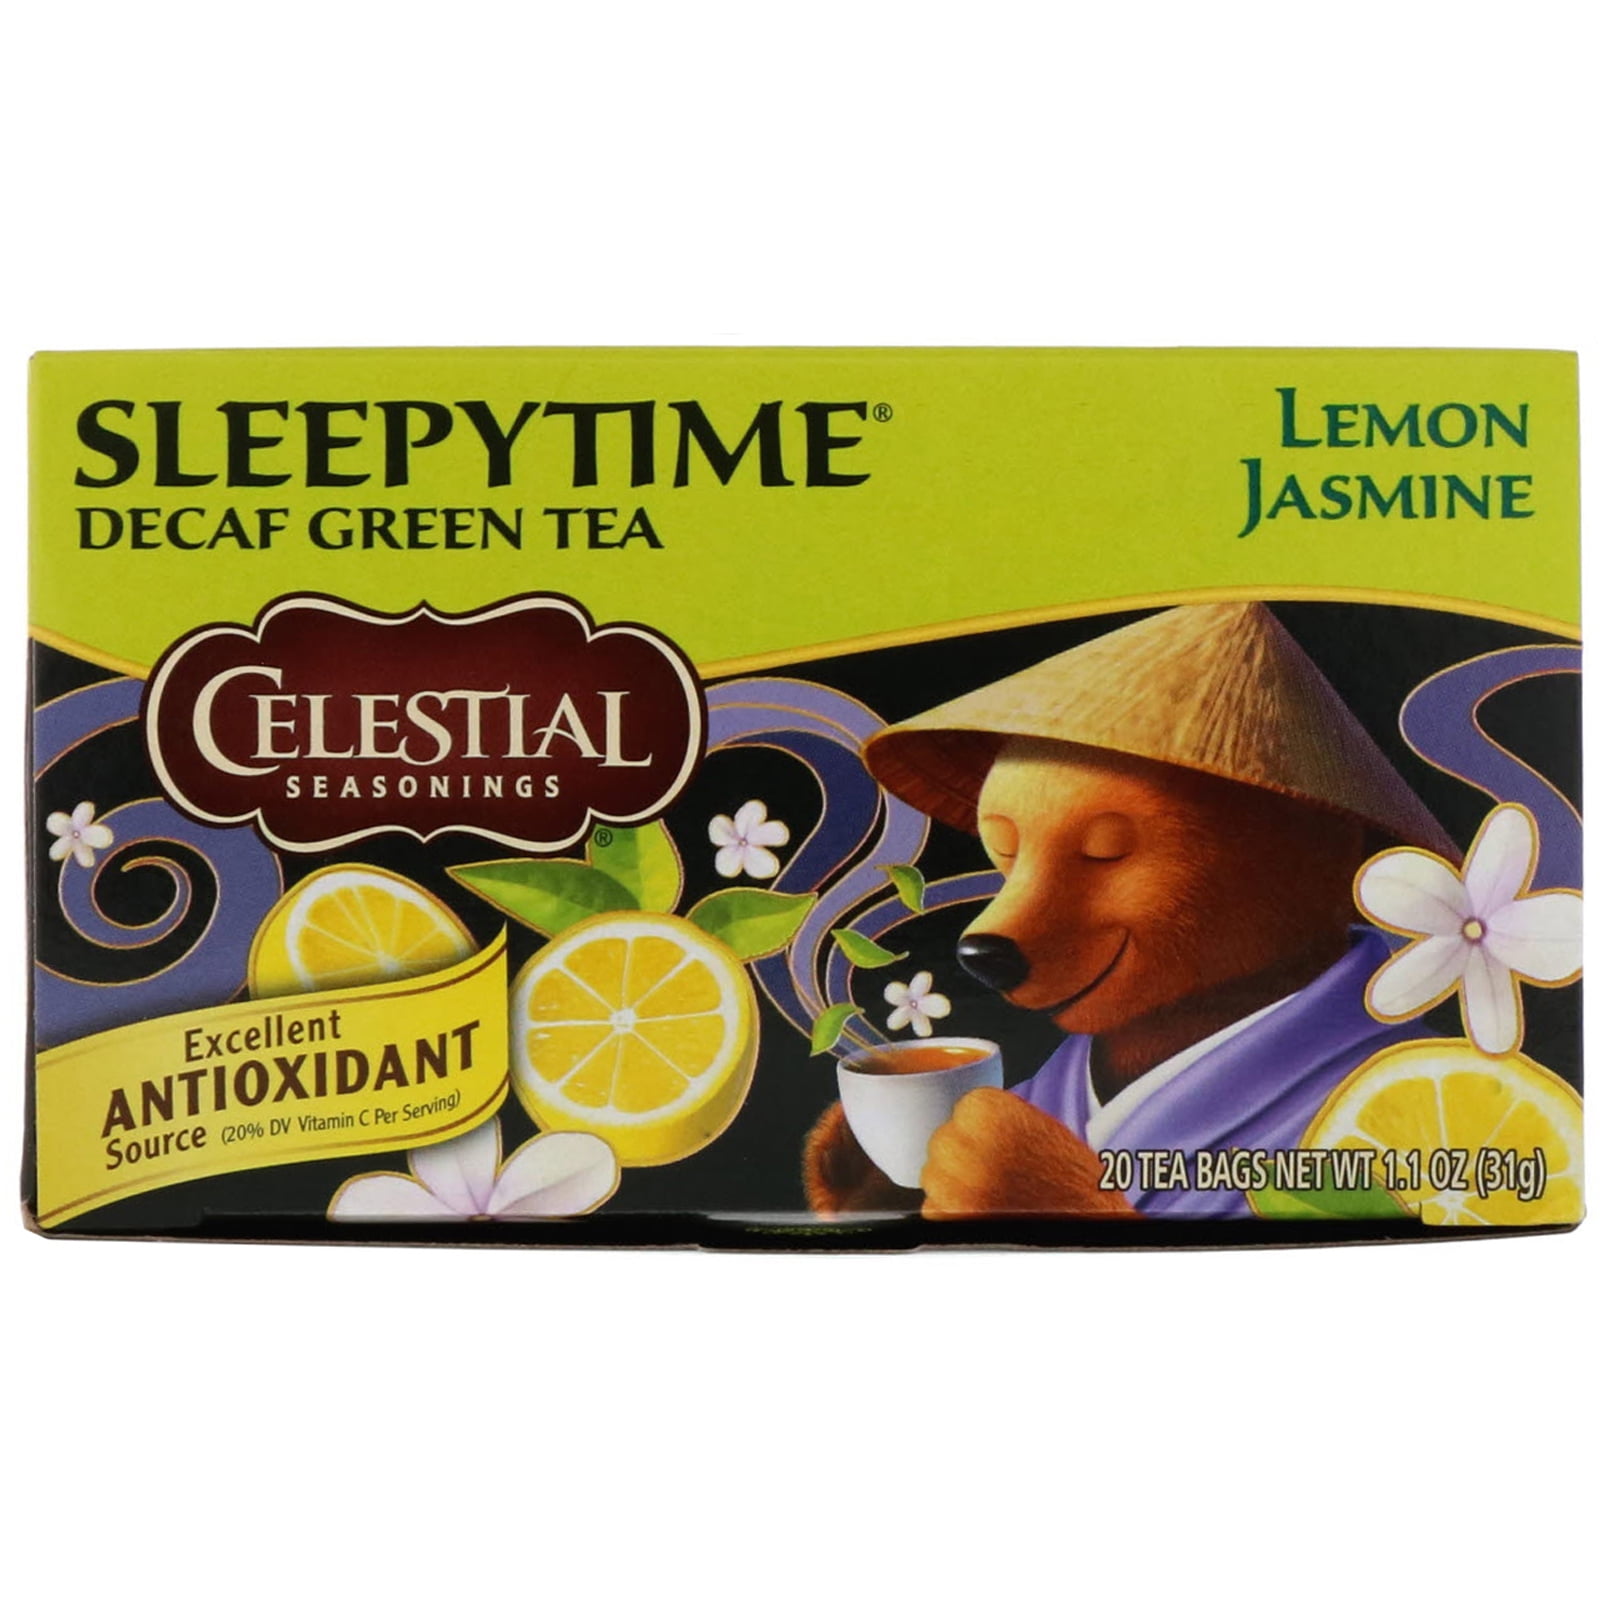 sleepytime tea review